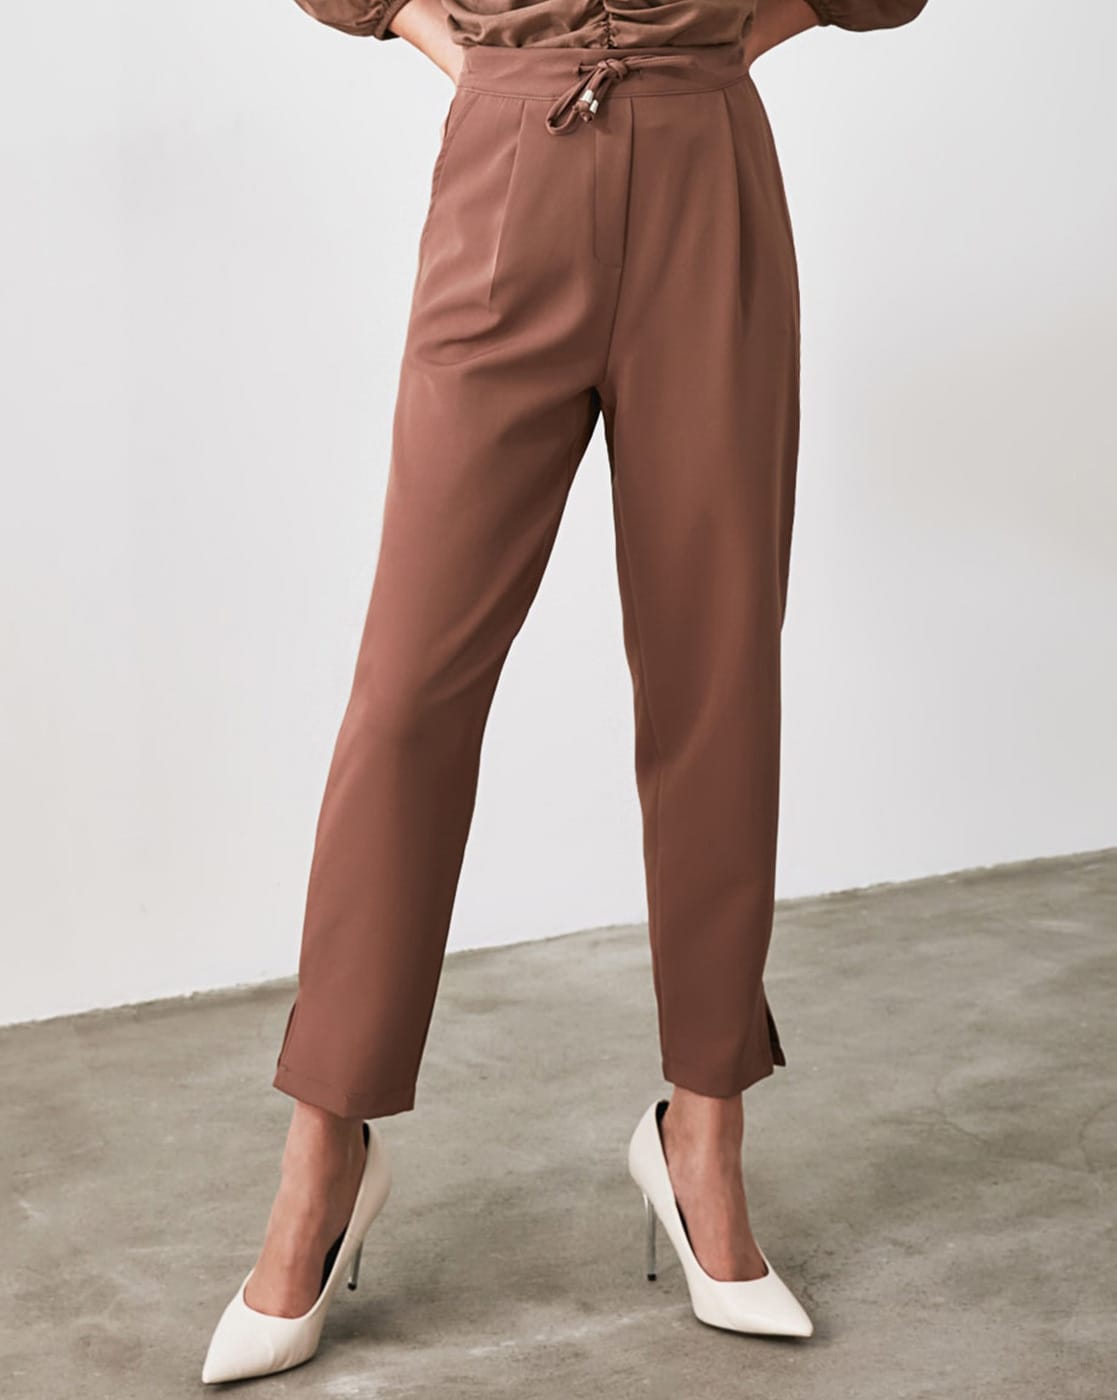 Zara high waist pants trousers